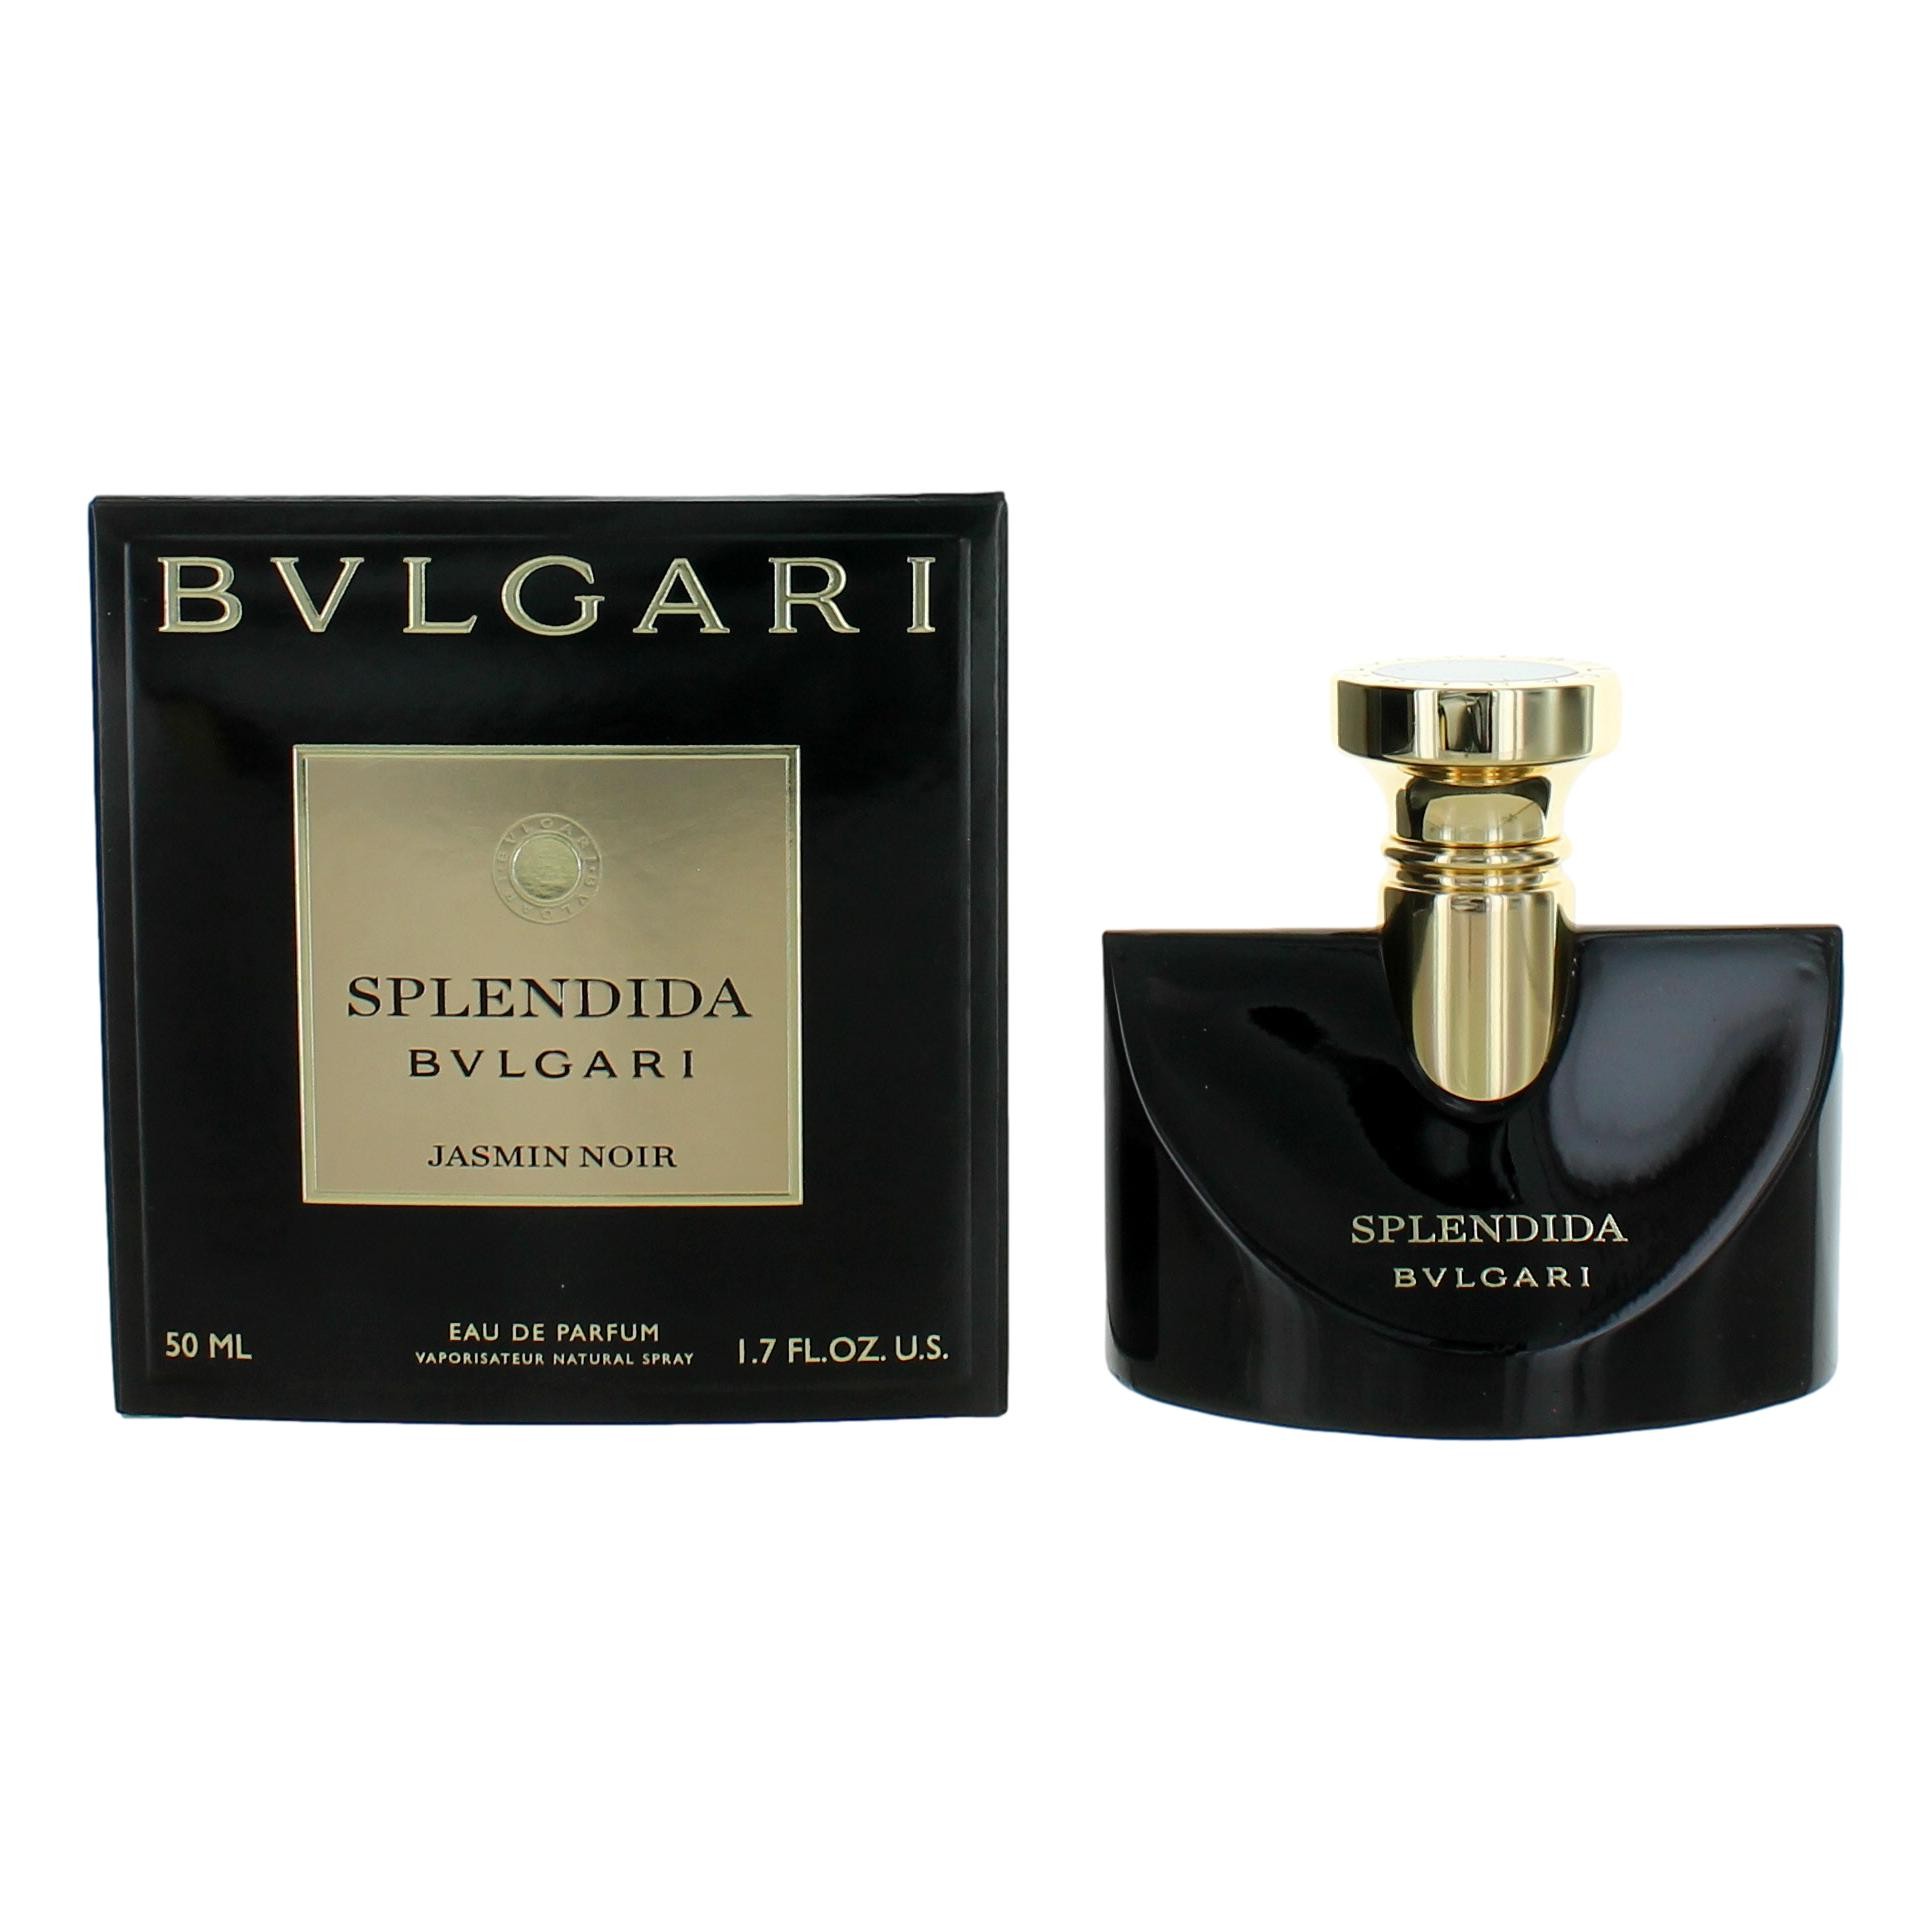 Bvlgari Splendida Jasmin Noir by Bvlgari 1.7 oz Eau De Parfum Spray for Women